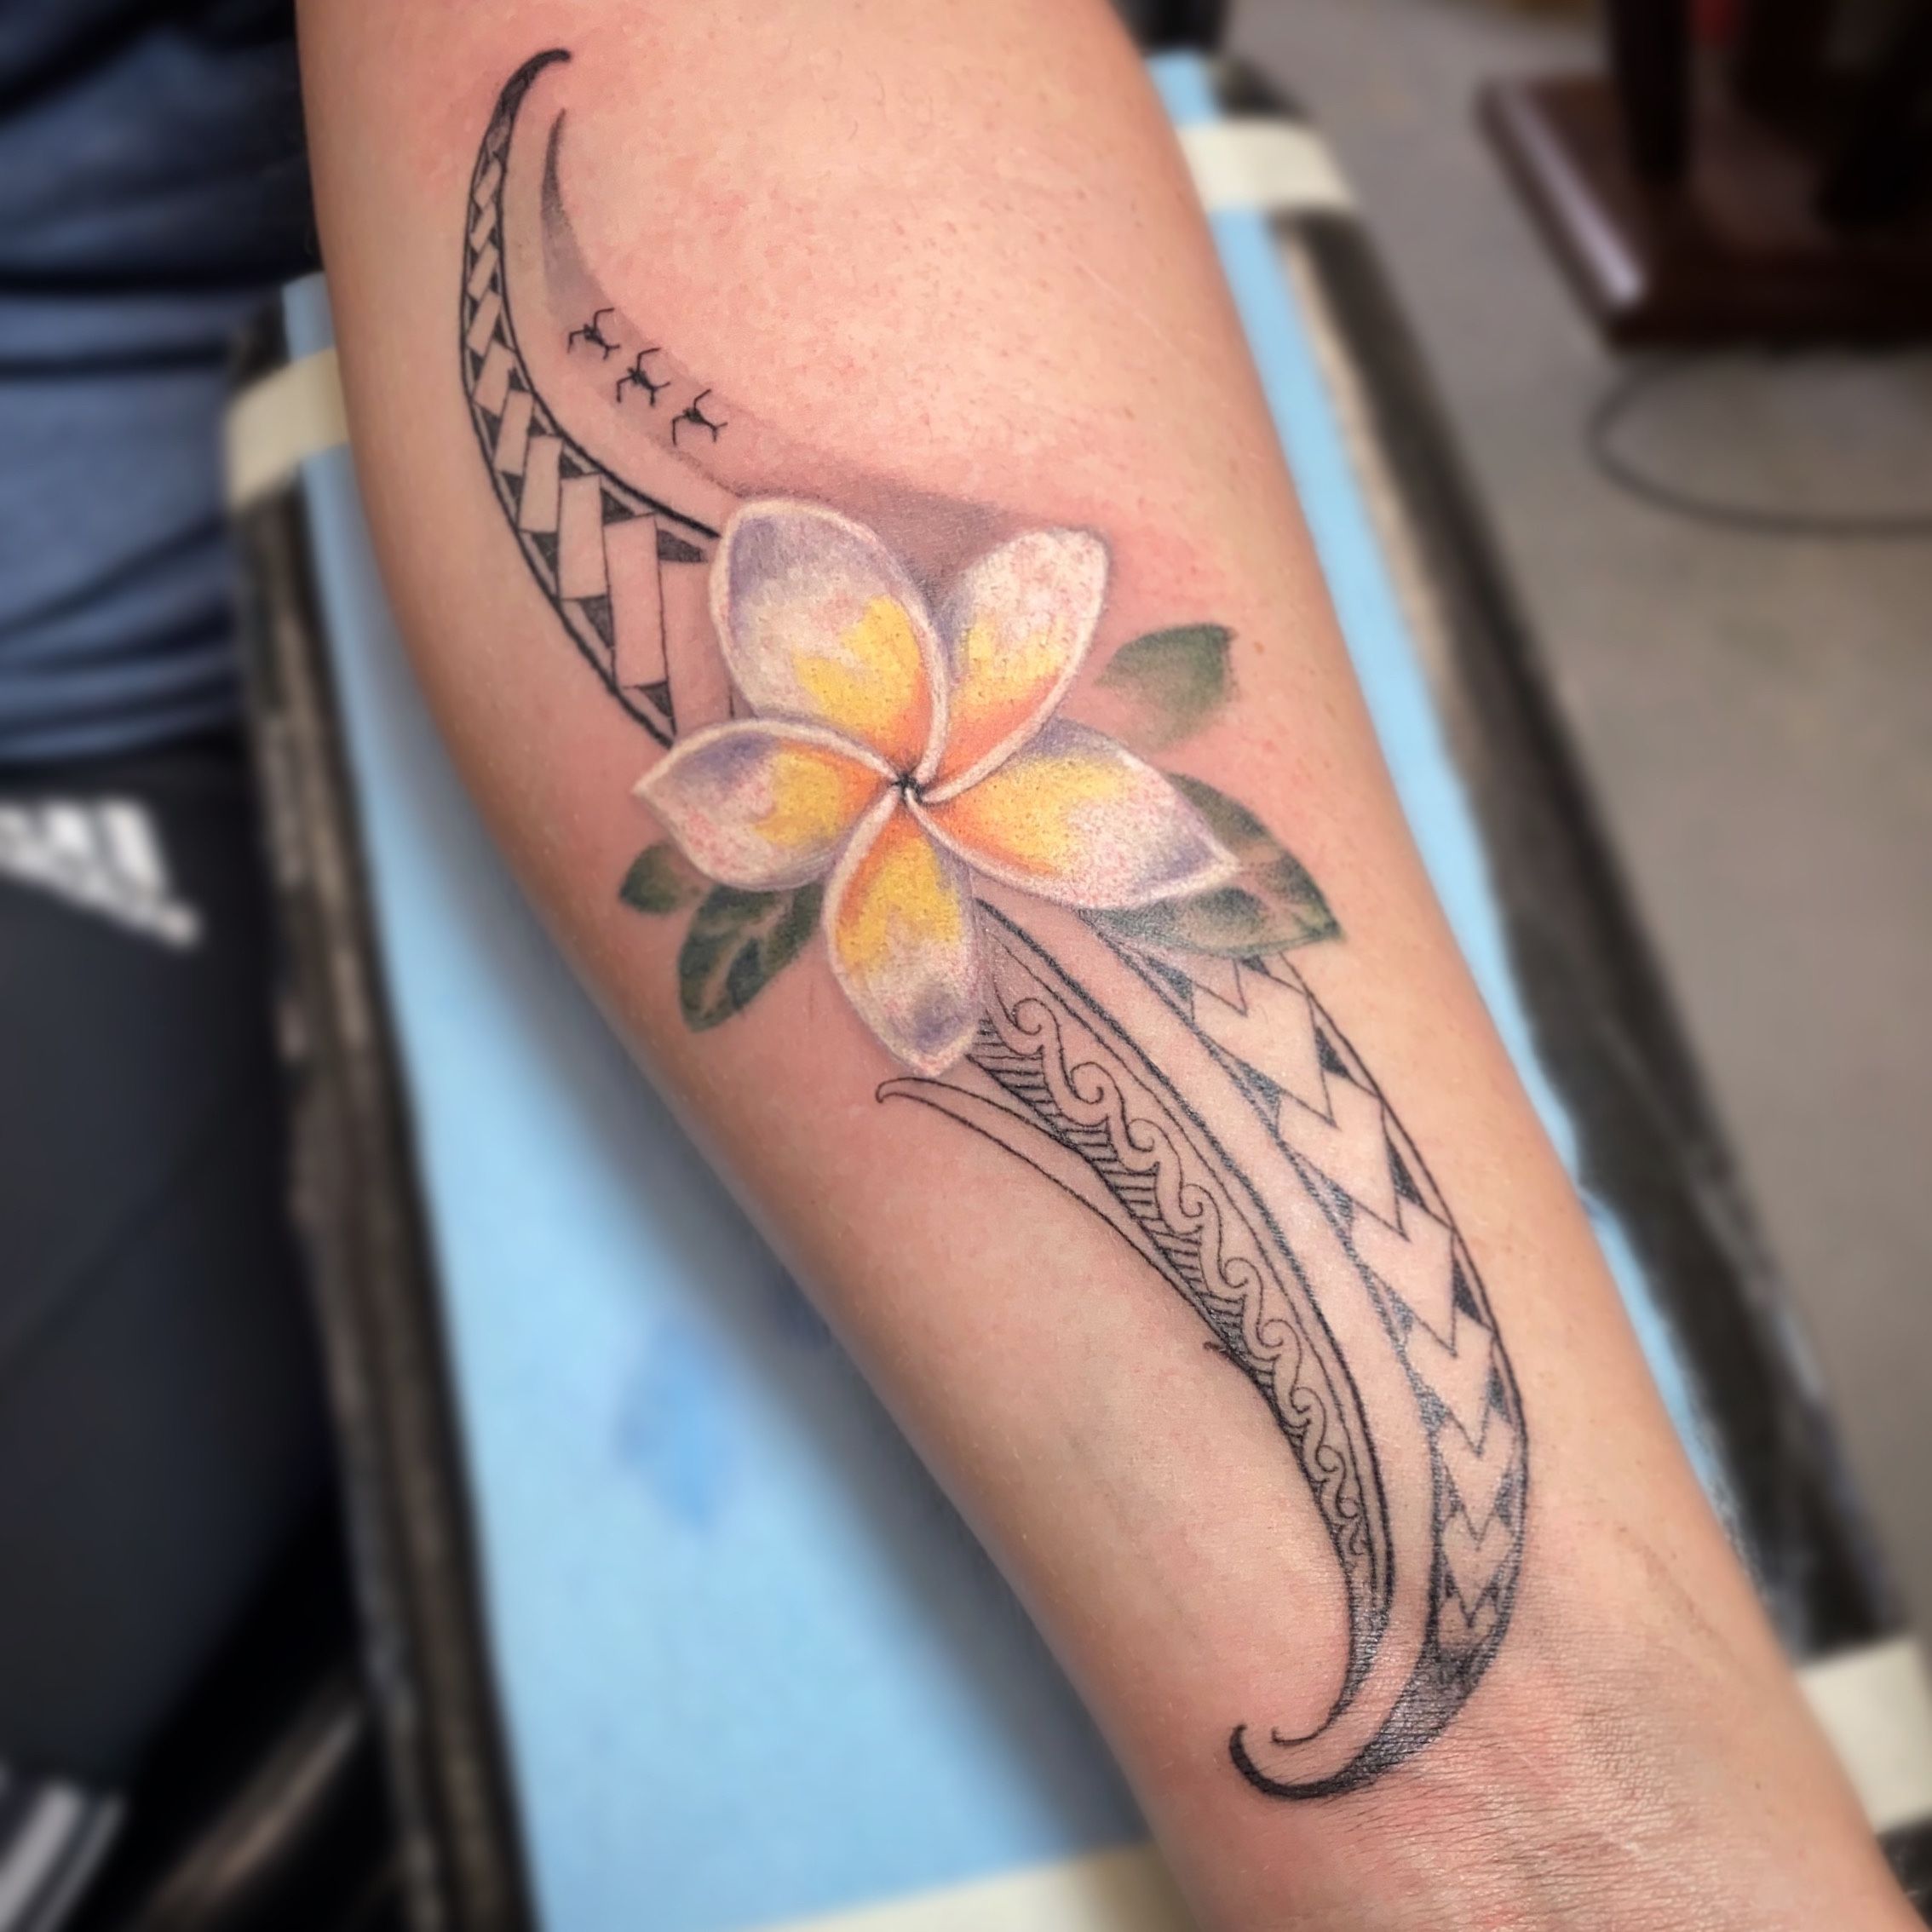 Hand poked frangipani tattoo on the inner forearm.